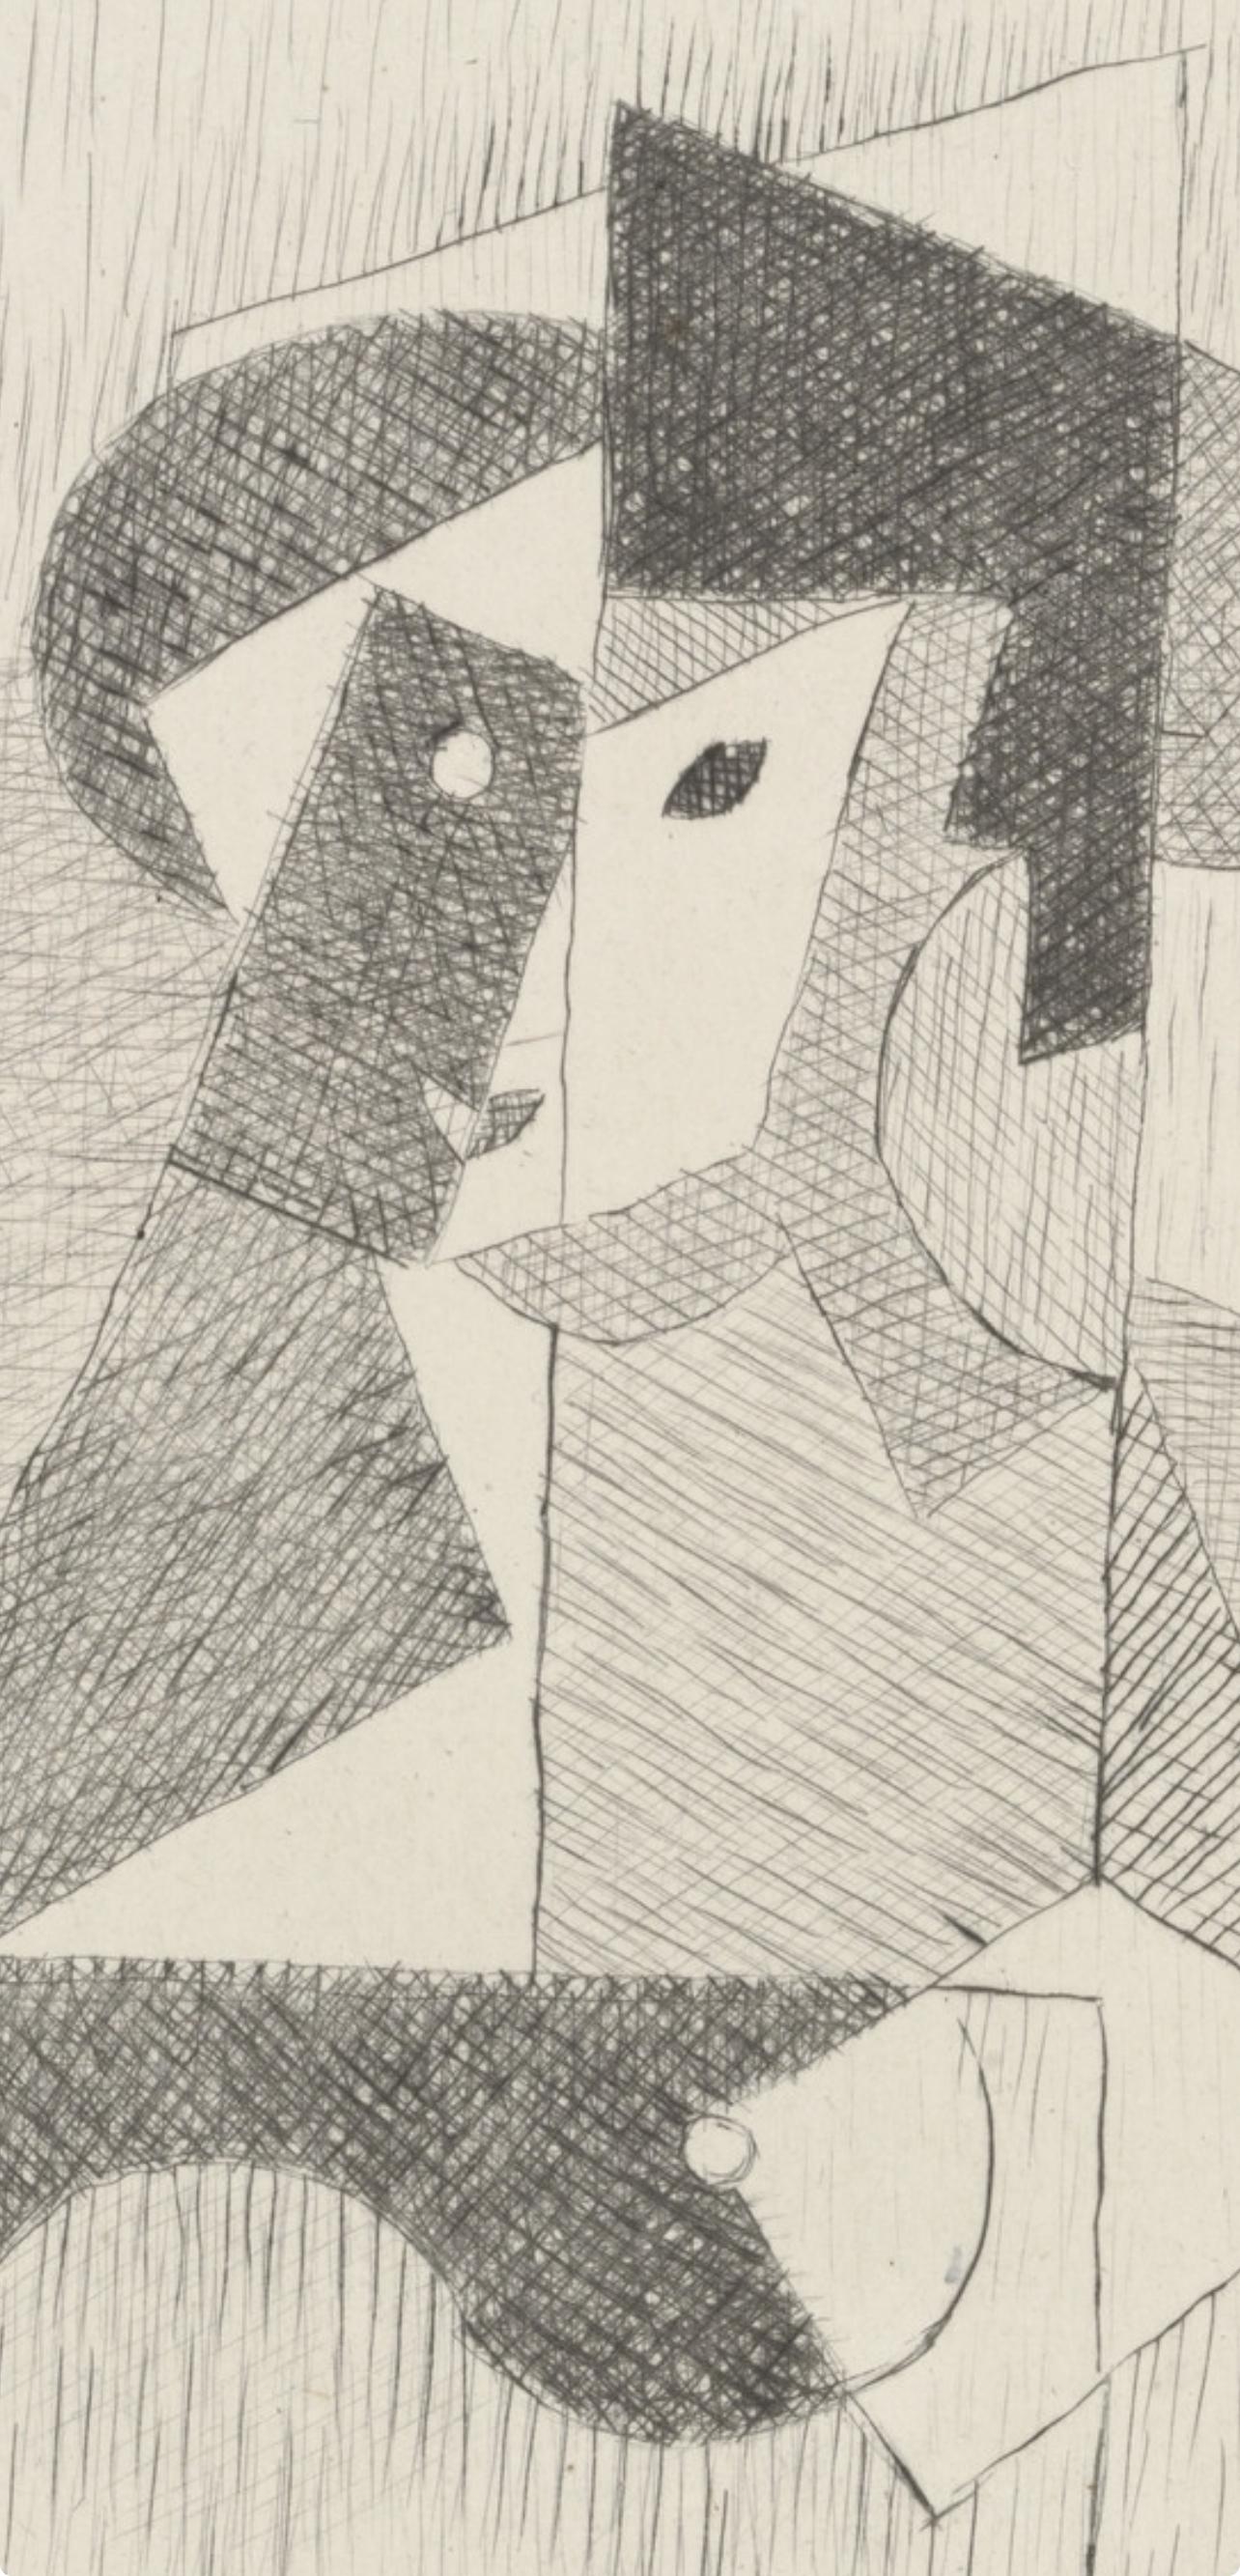 Metzinger, Femme à sa Toilette (Metzinger, AM-18-013), Du cubisme (nach) – Print von Jean Metzinger